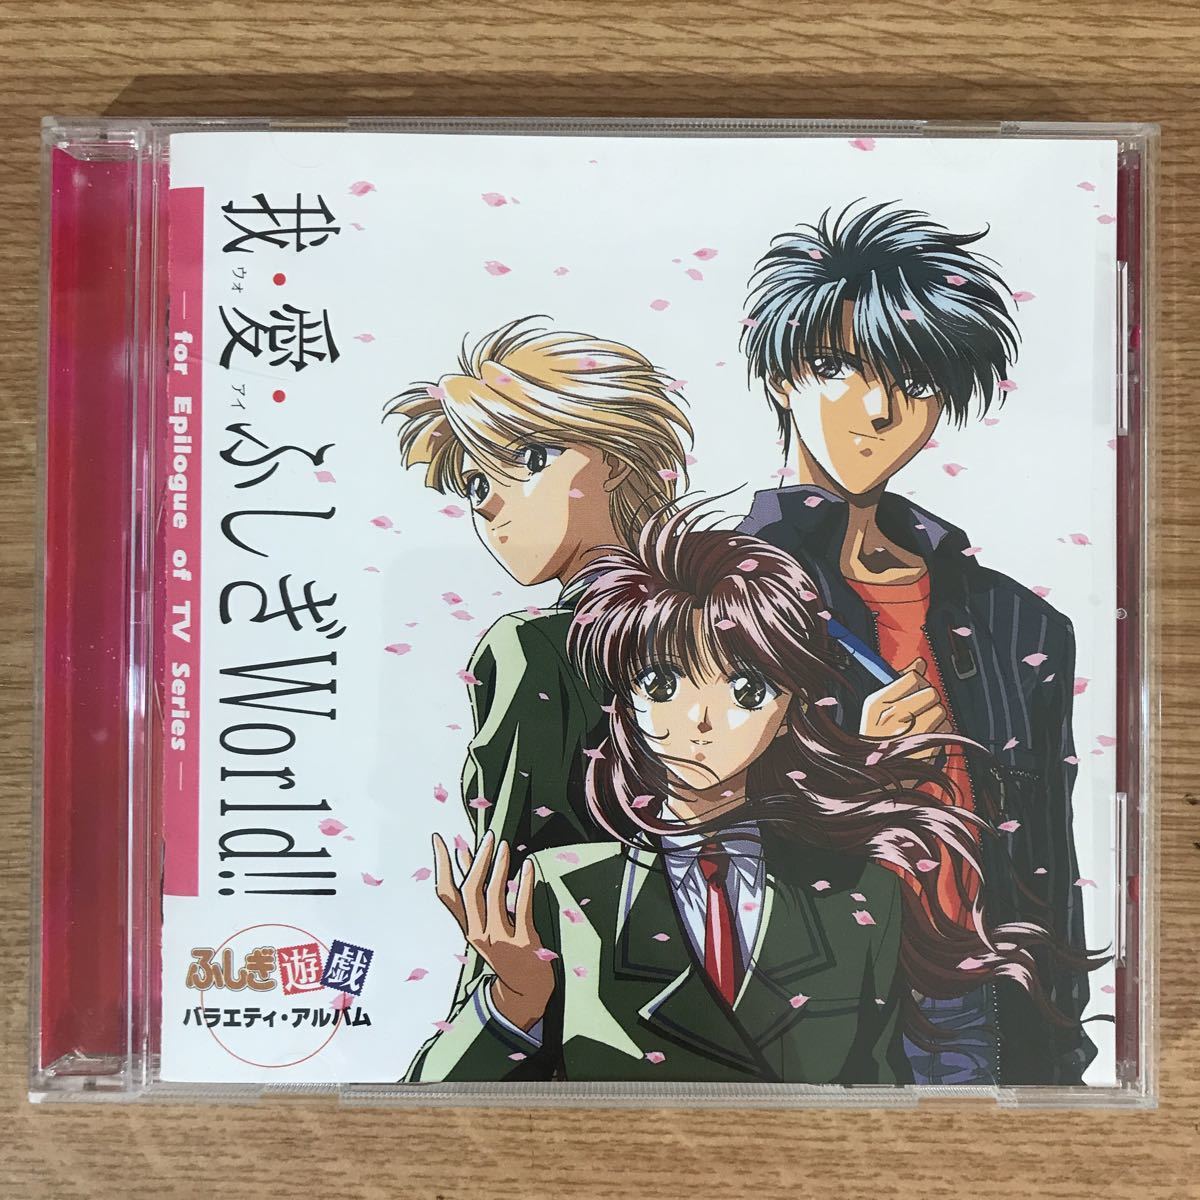 (D144) used CD100 jpy .* love *... world!! Fushigi Yuugi variety * album 